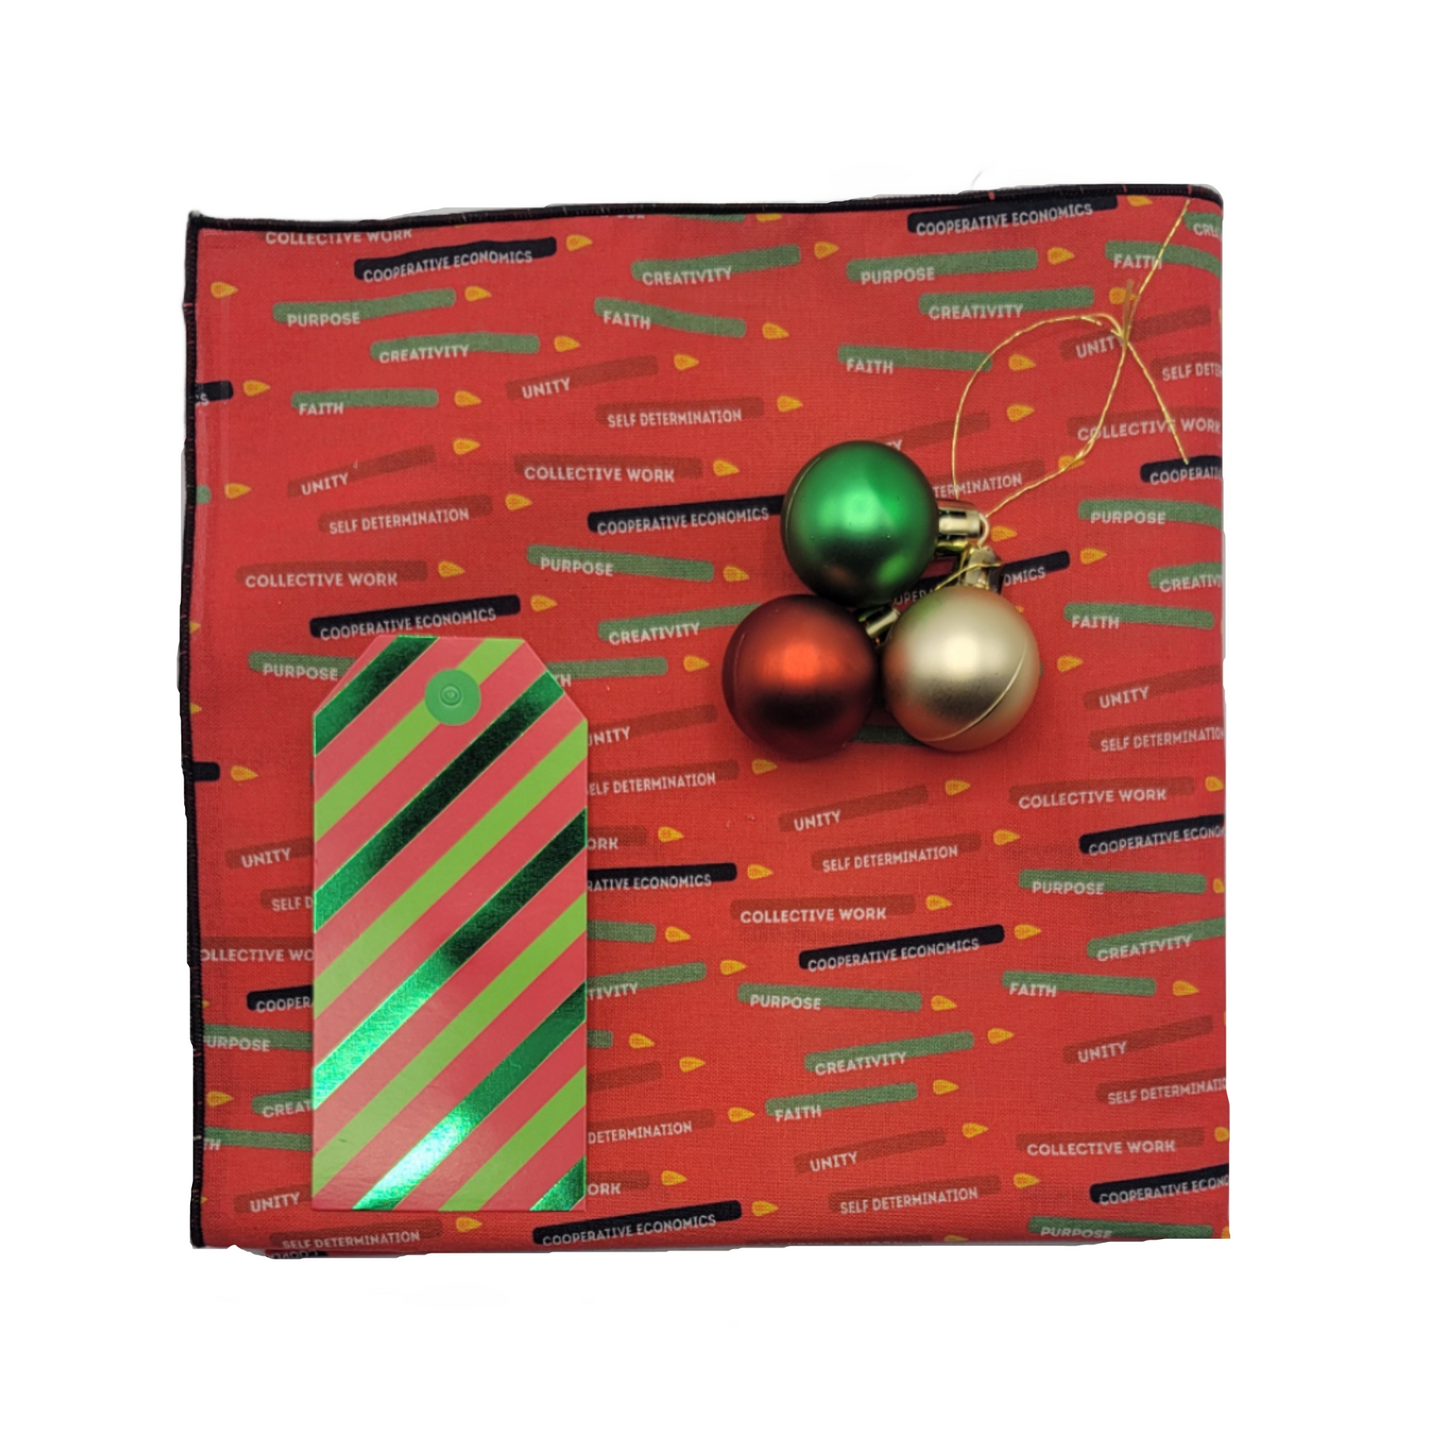 Furoshiki 3 pc Fabric Gift Wrap Kit - Holiday/Kwanzaa Candles on Red